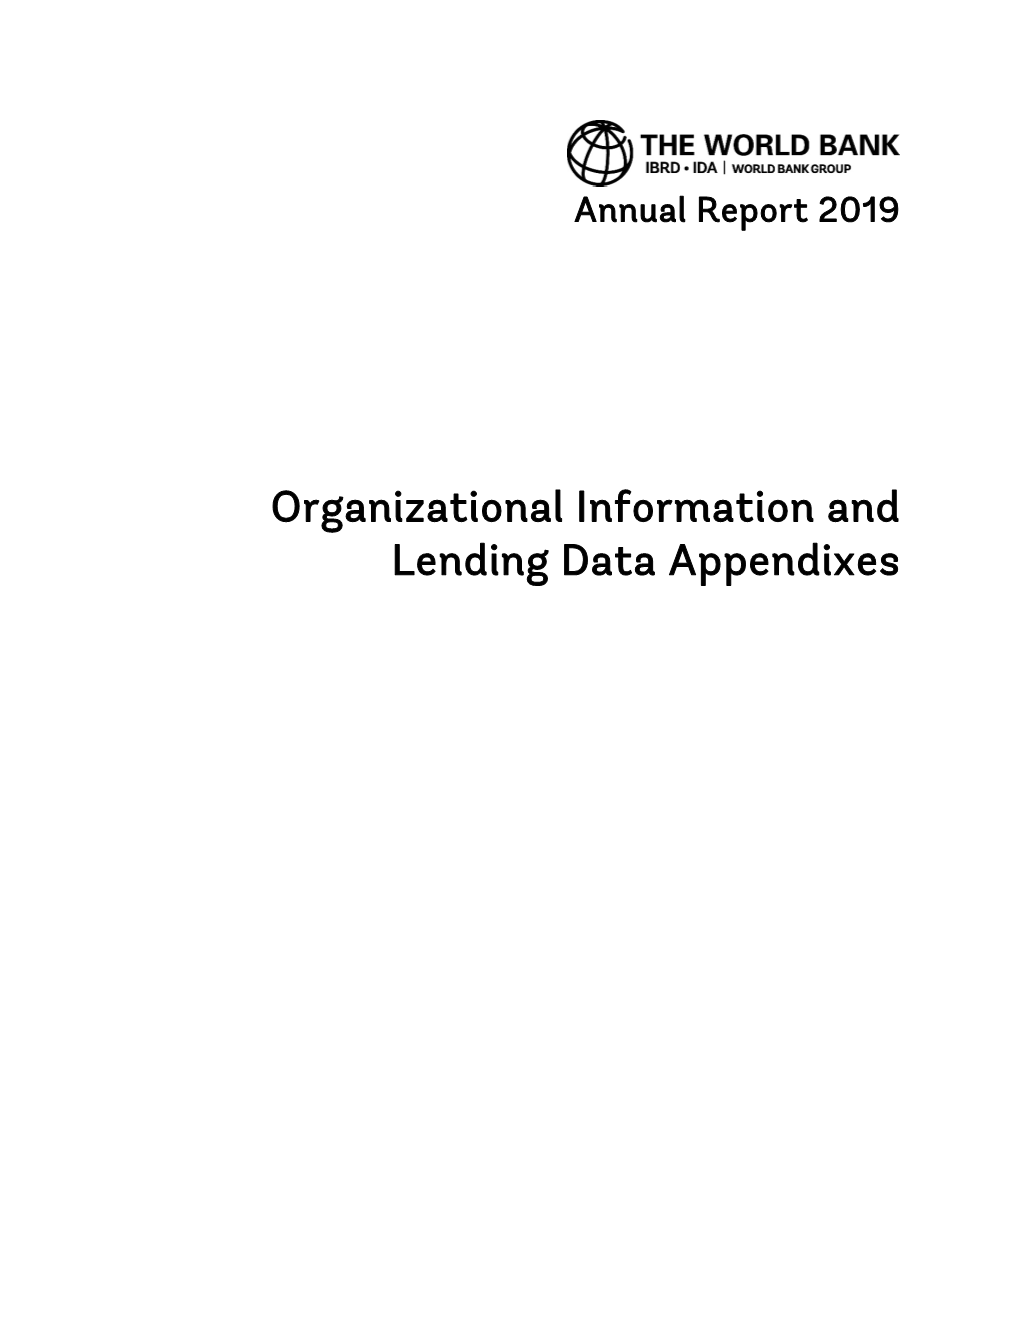 Annual Report 2019 Appendixes